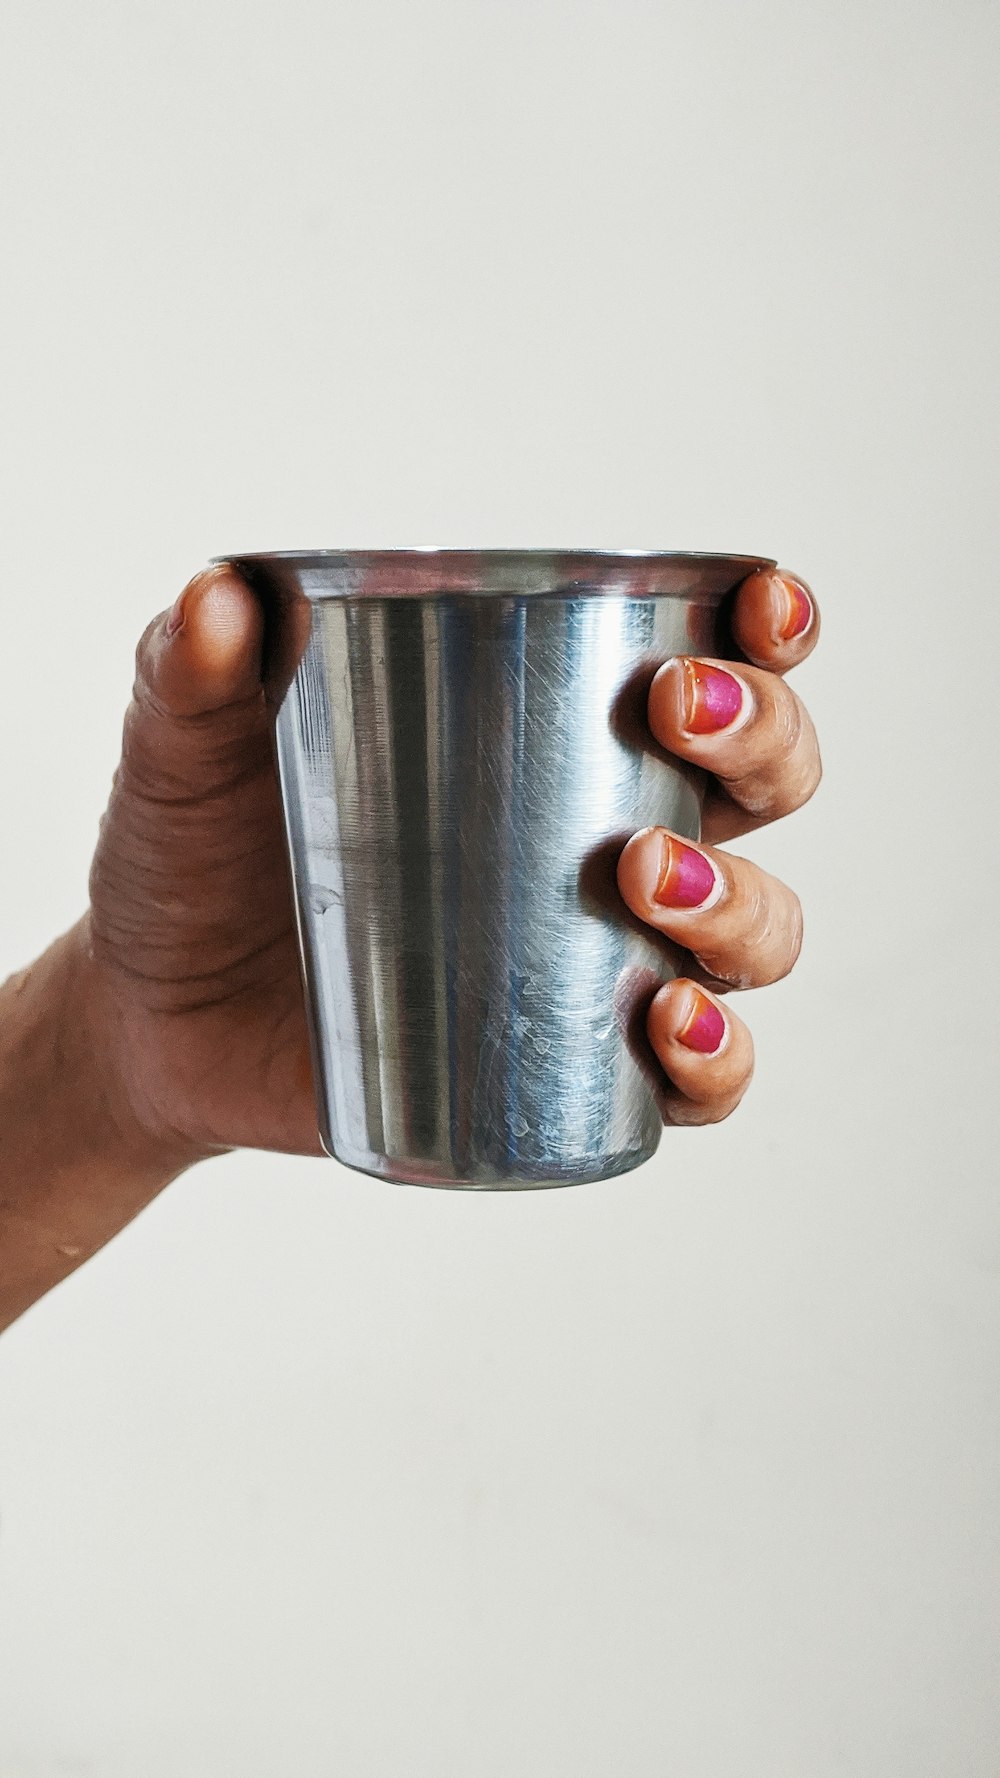 Silver starbucks travel mug on brown wooden table photo – Free Ca Image on  Unsplash